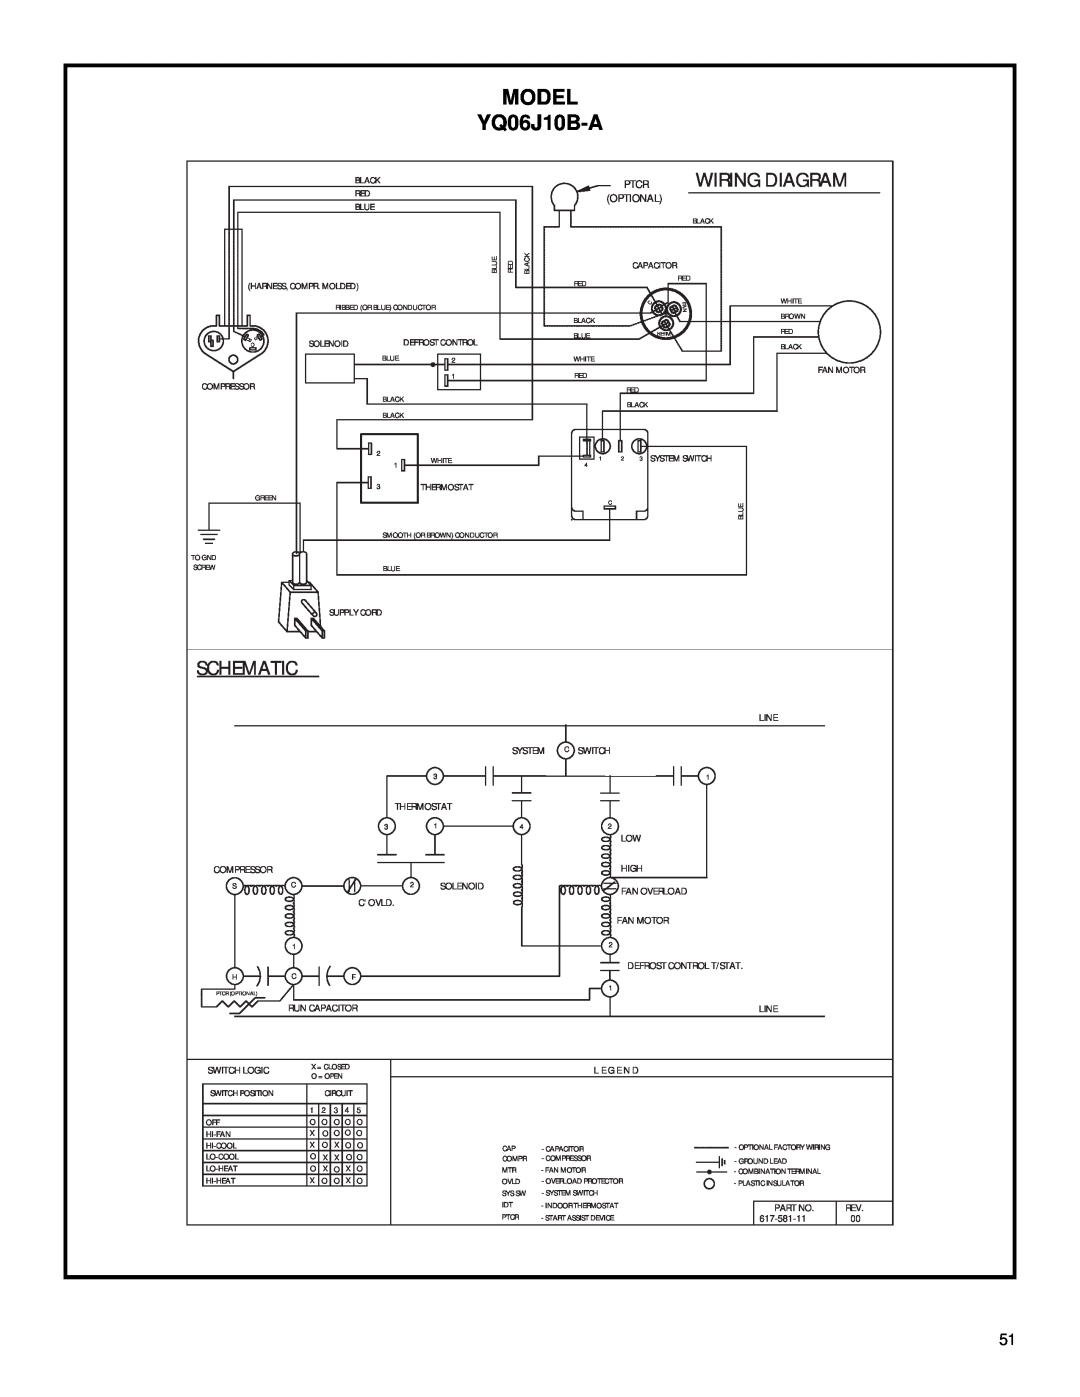 Friedrich racservmn service manual MODEL YQ06J10B-A, Ptcr Wiring Diagram, Schematic 